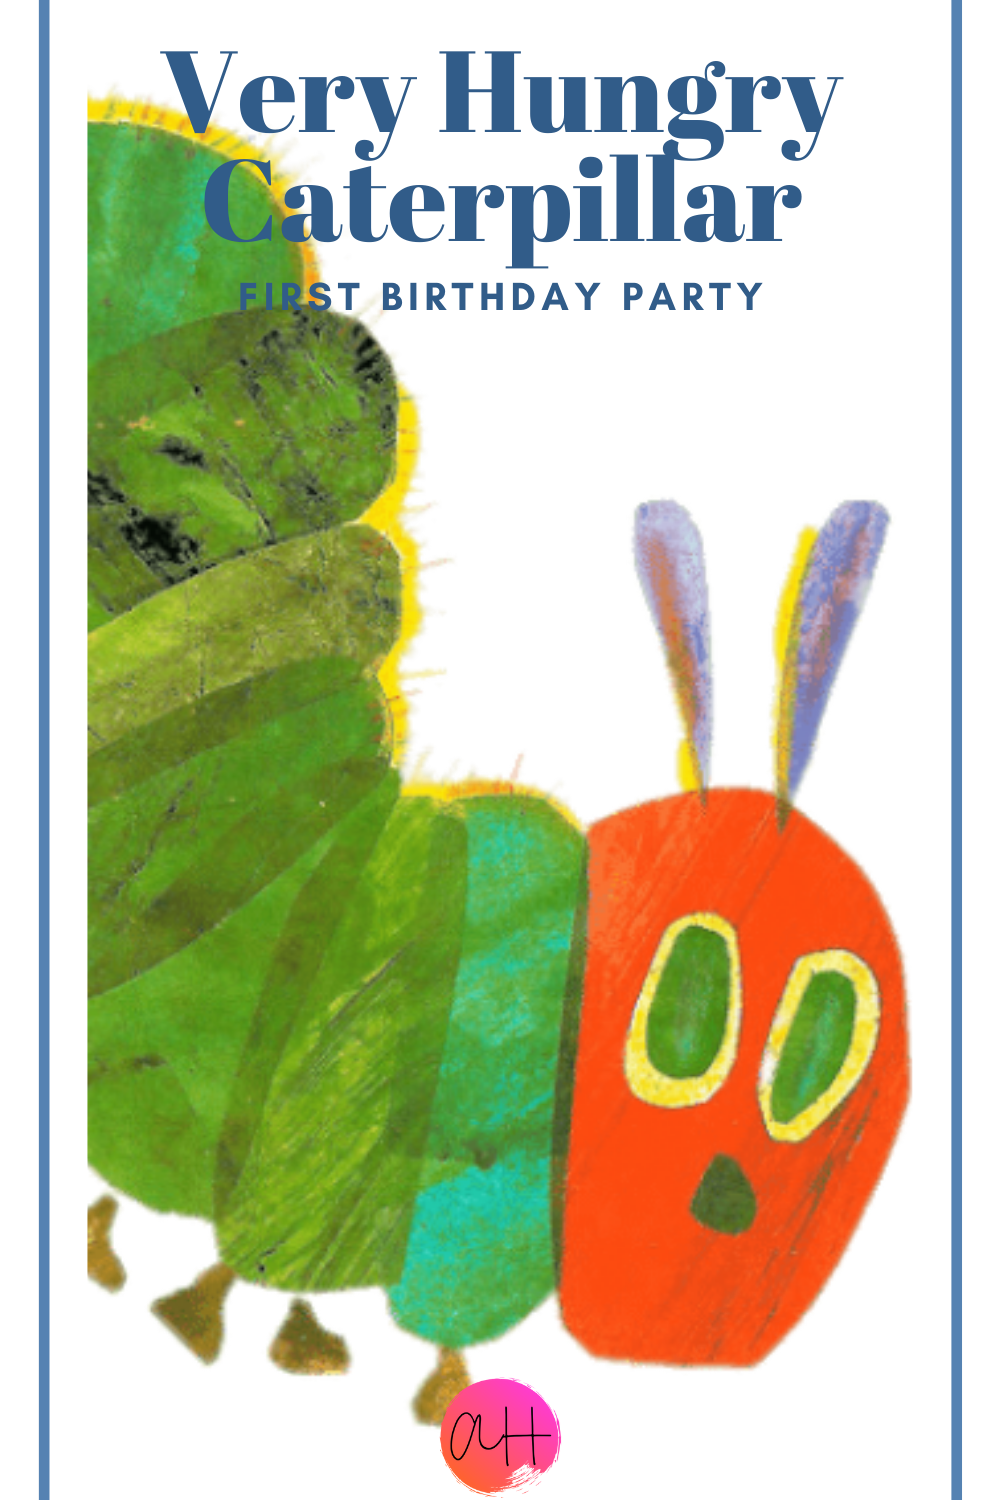 Very Hungry Caterpillar Birthday Party